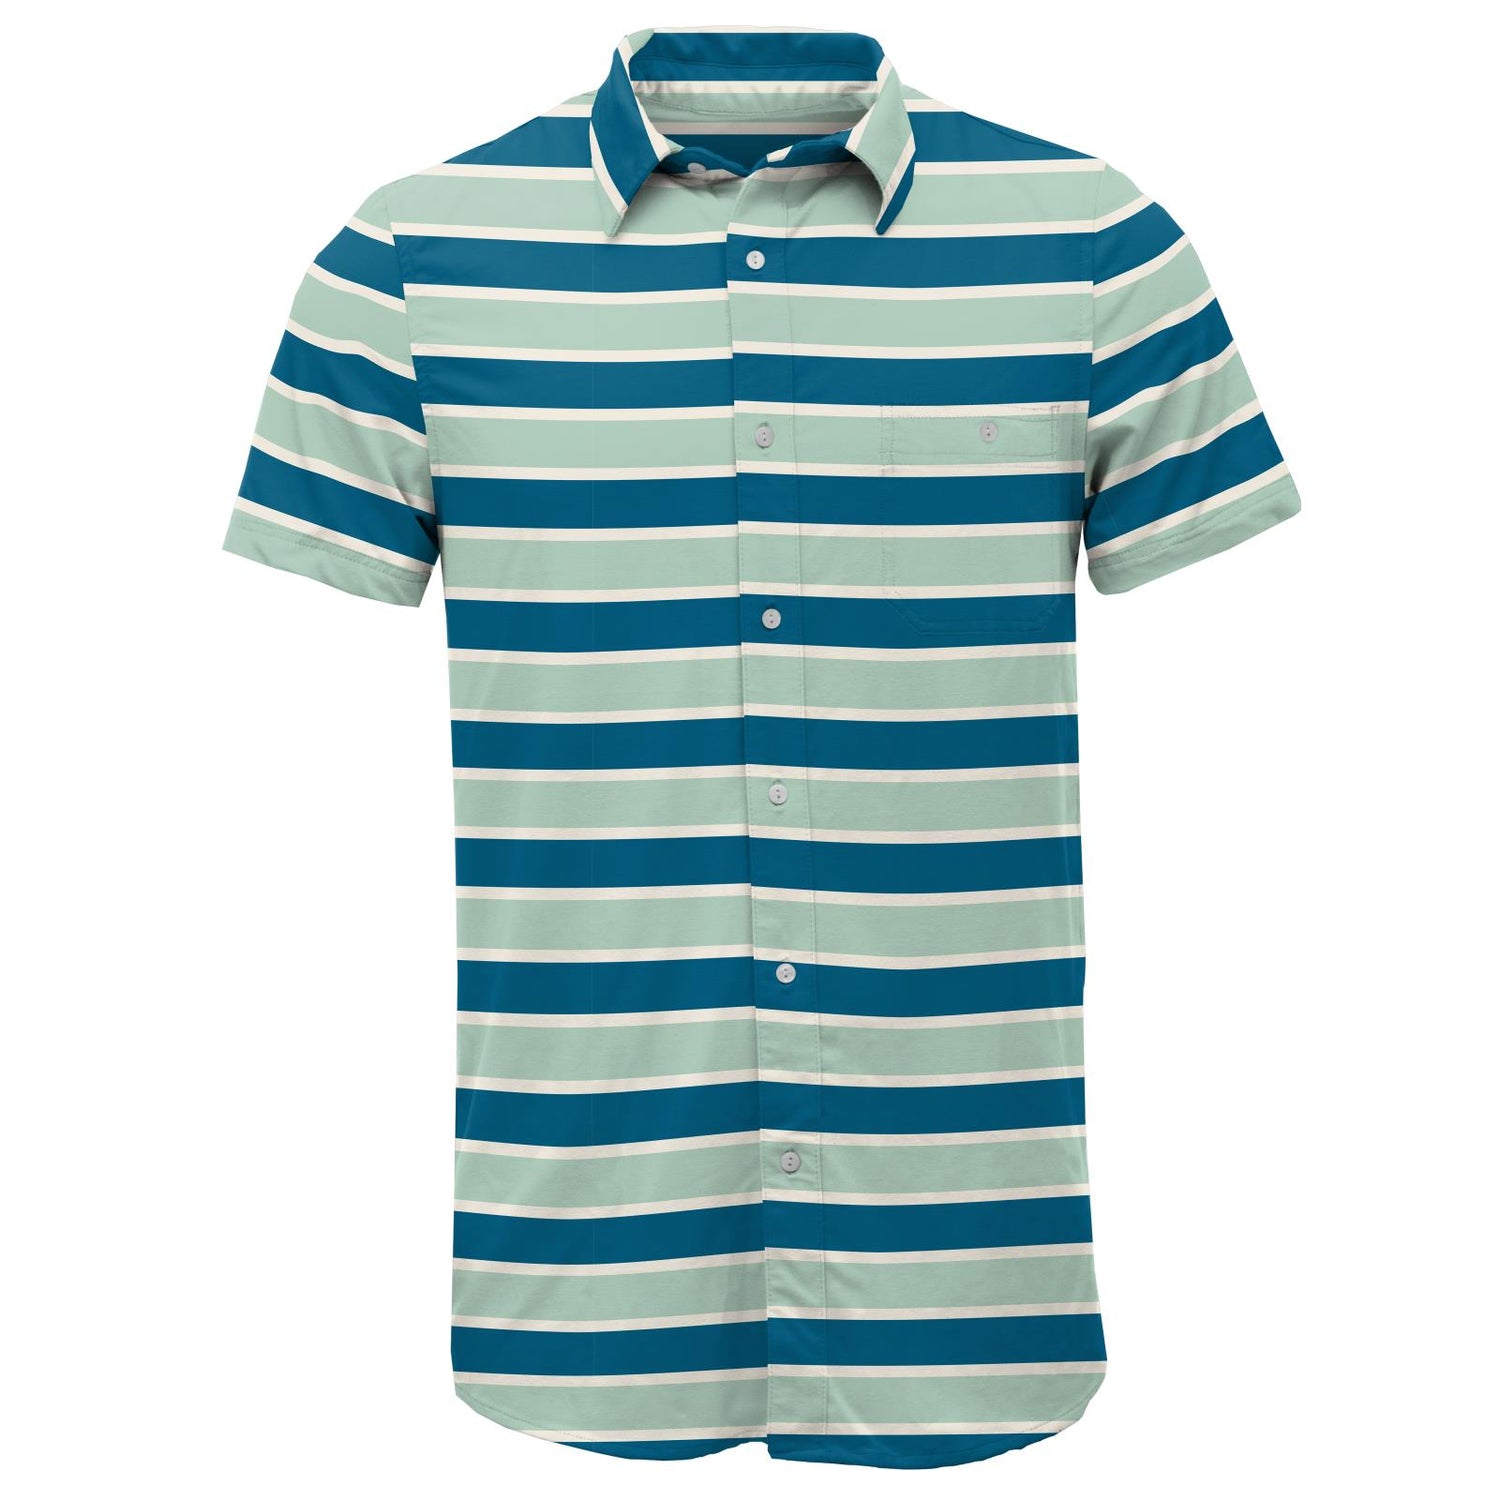 Men's Print Short Sleeve Luxe Jersey Button Down Shirt in Seaside Cafe Stripe